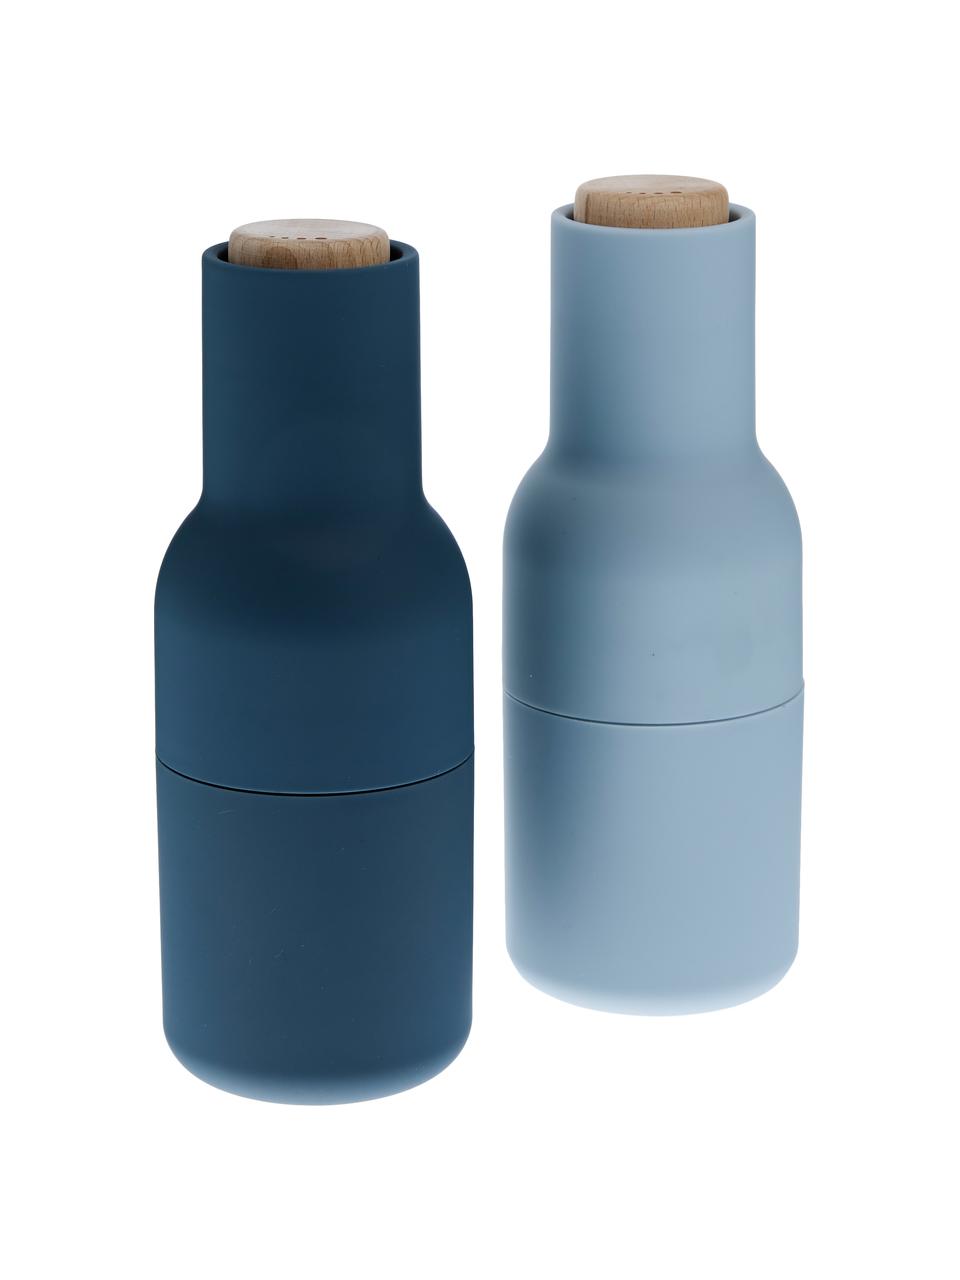 Designer Salz- & Pfeffermühle Bottle Grinder mit Buchenholzdeckel, 2er-Set, Korpus: Kunststoff, Mahlwerk: Keramik, Deckel: Holz, Blau, Hellblau, Ø 8 x H 21 cm